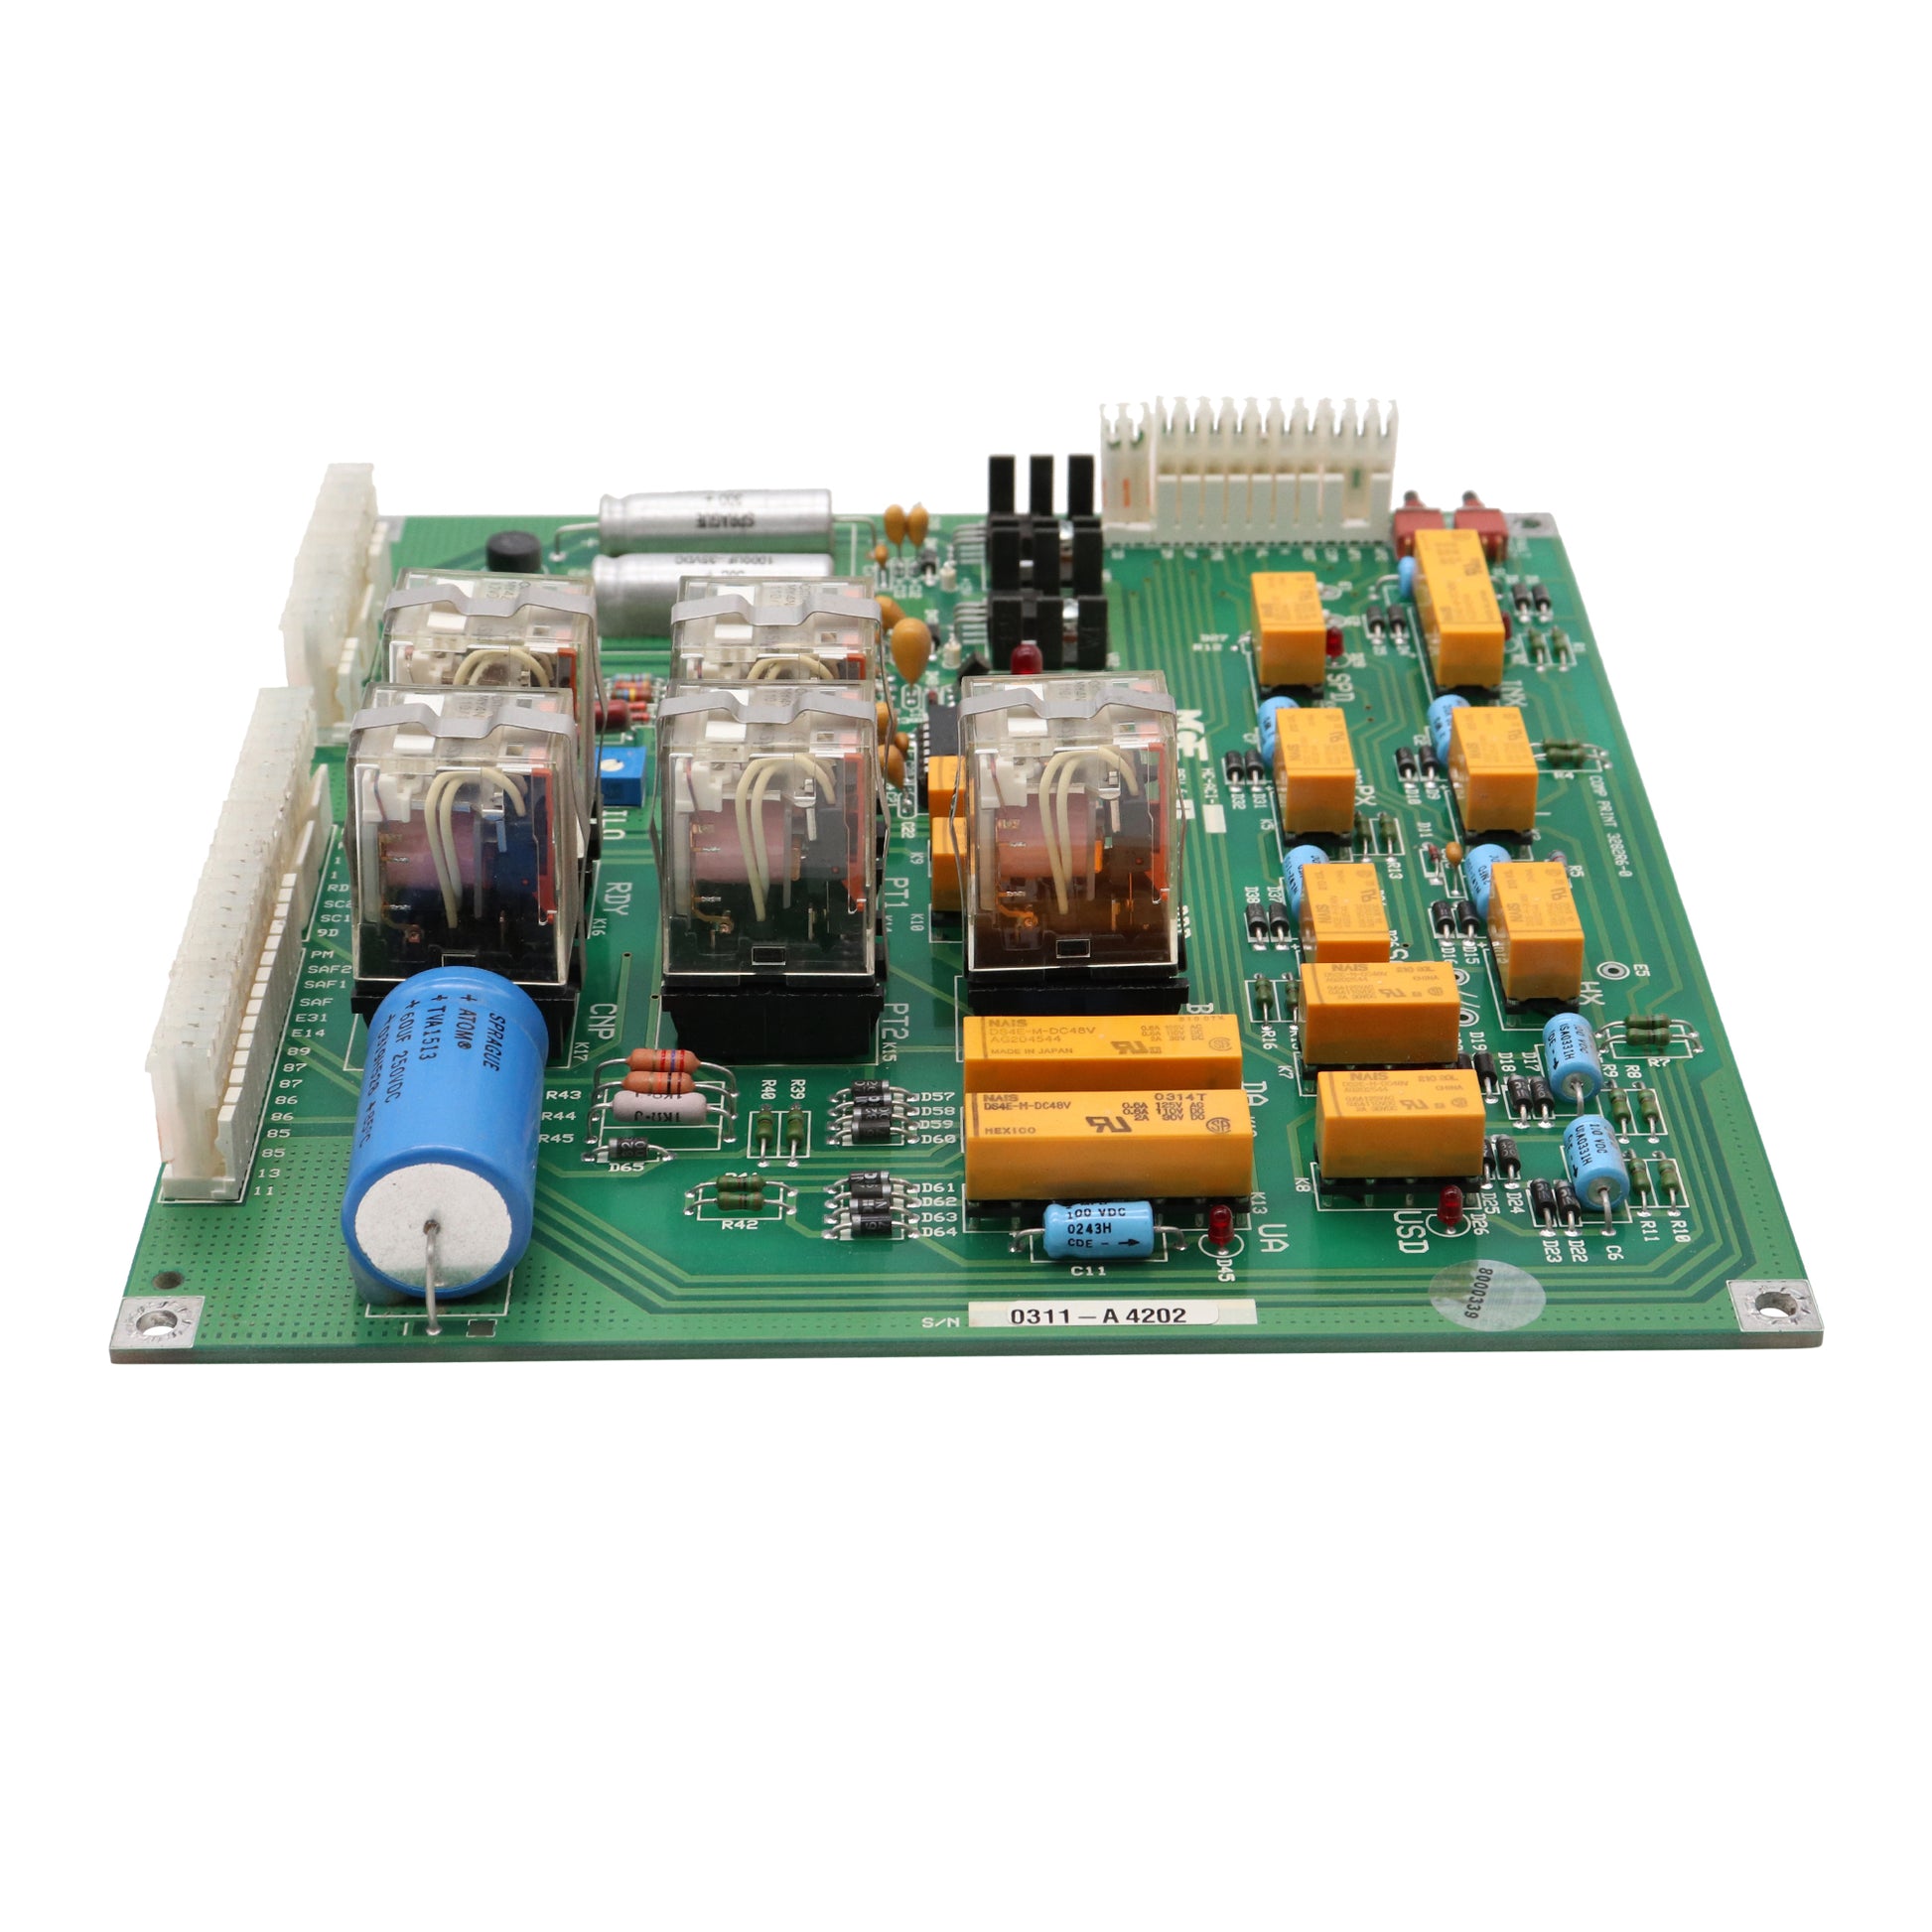 MCE Electronics 0311-A-4202